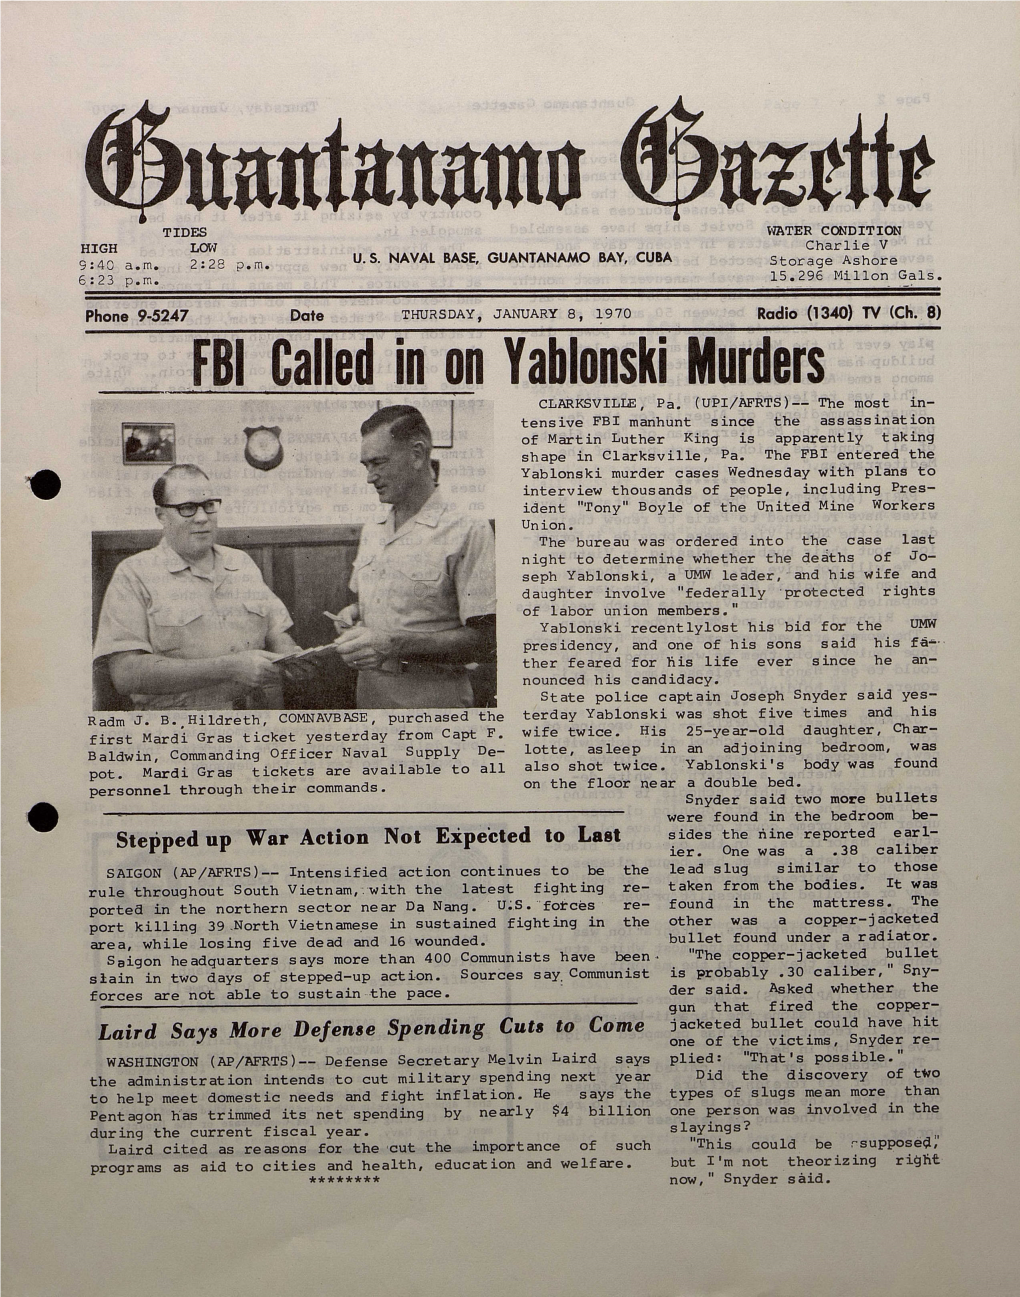 FBI Called in on Yablonski Murders CLARKSVILLE, Pa